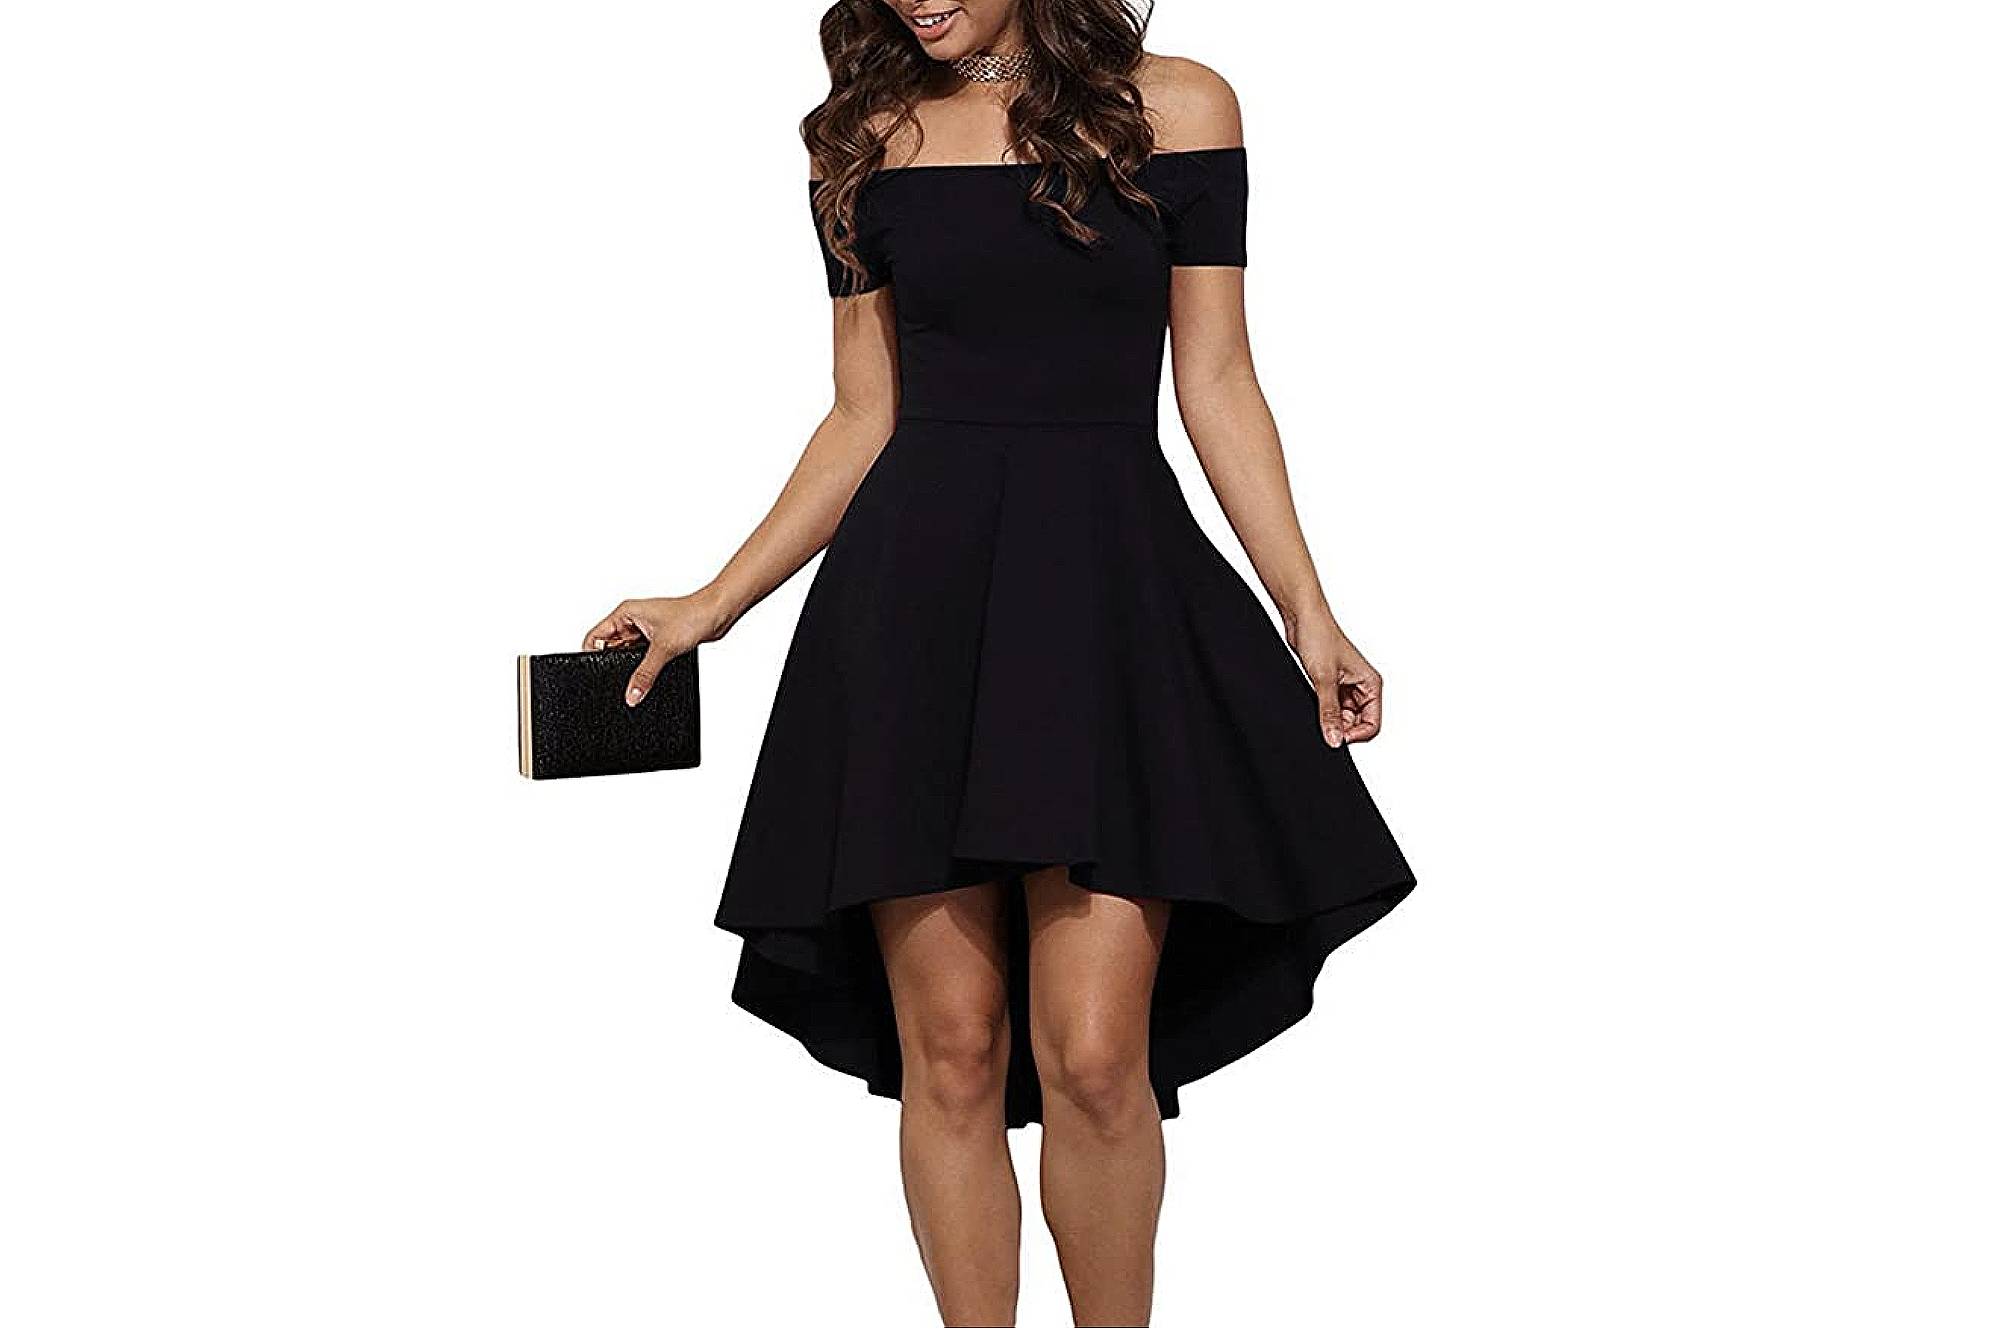 Sarin Mathews Little Black Dress Is Our New Favorite on Amazon